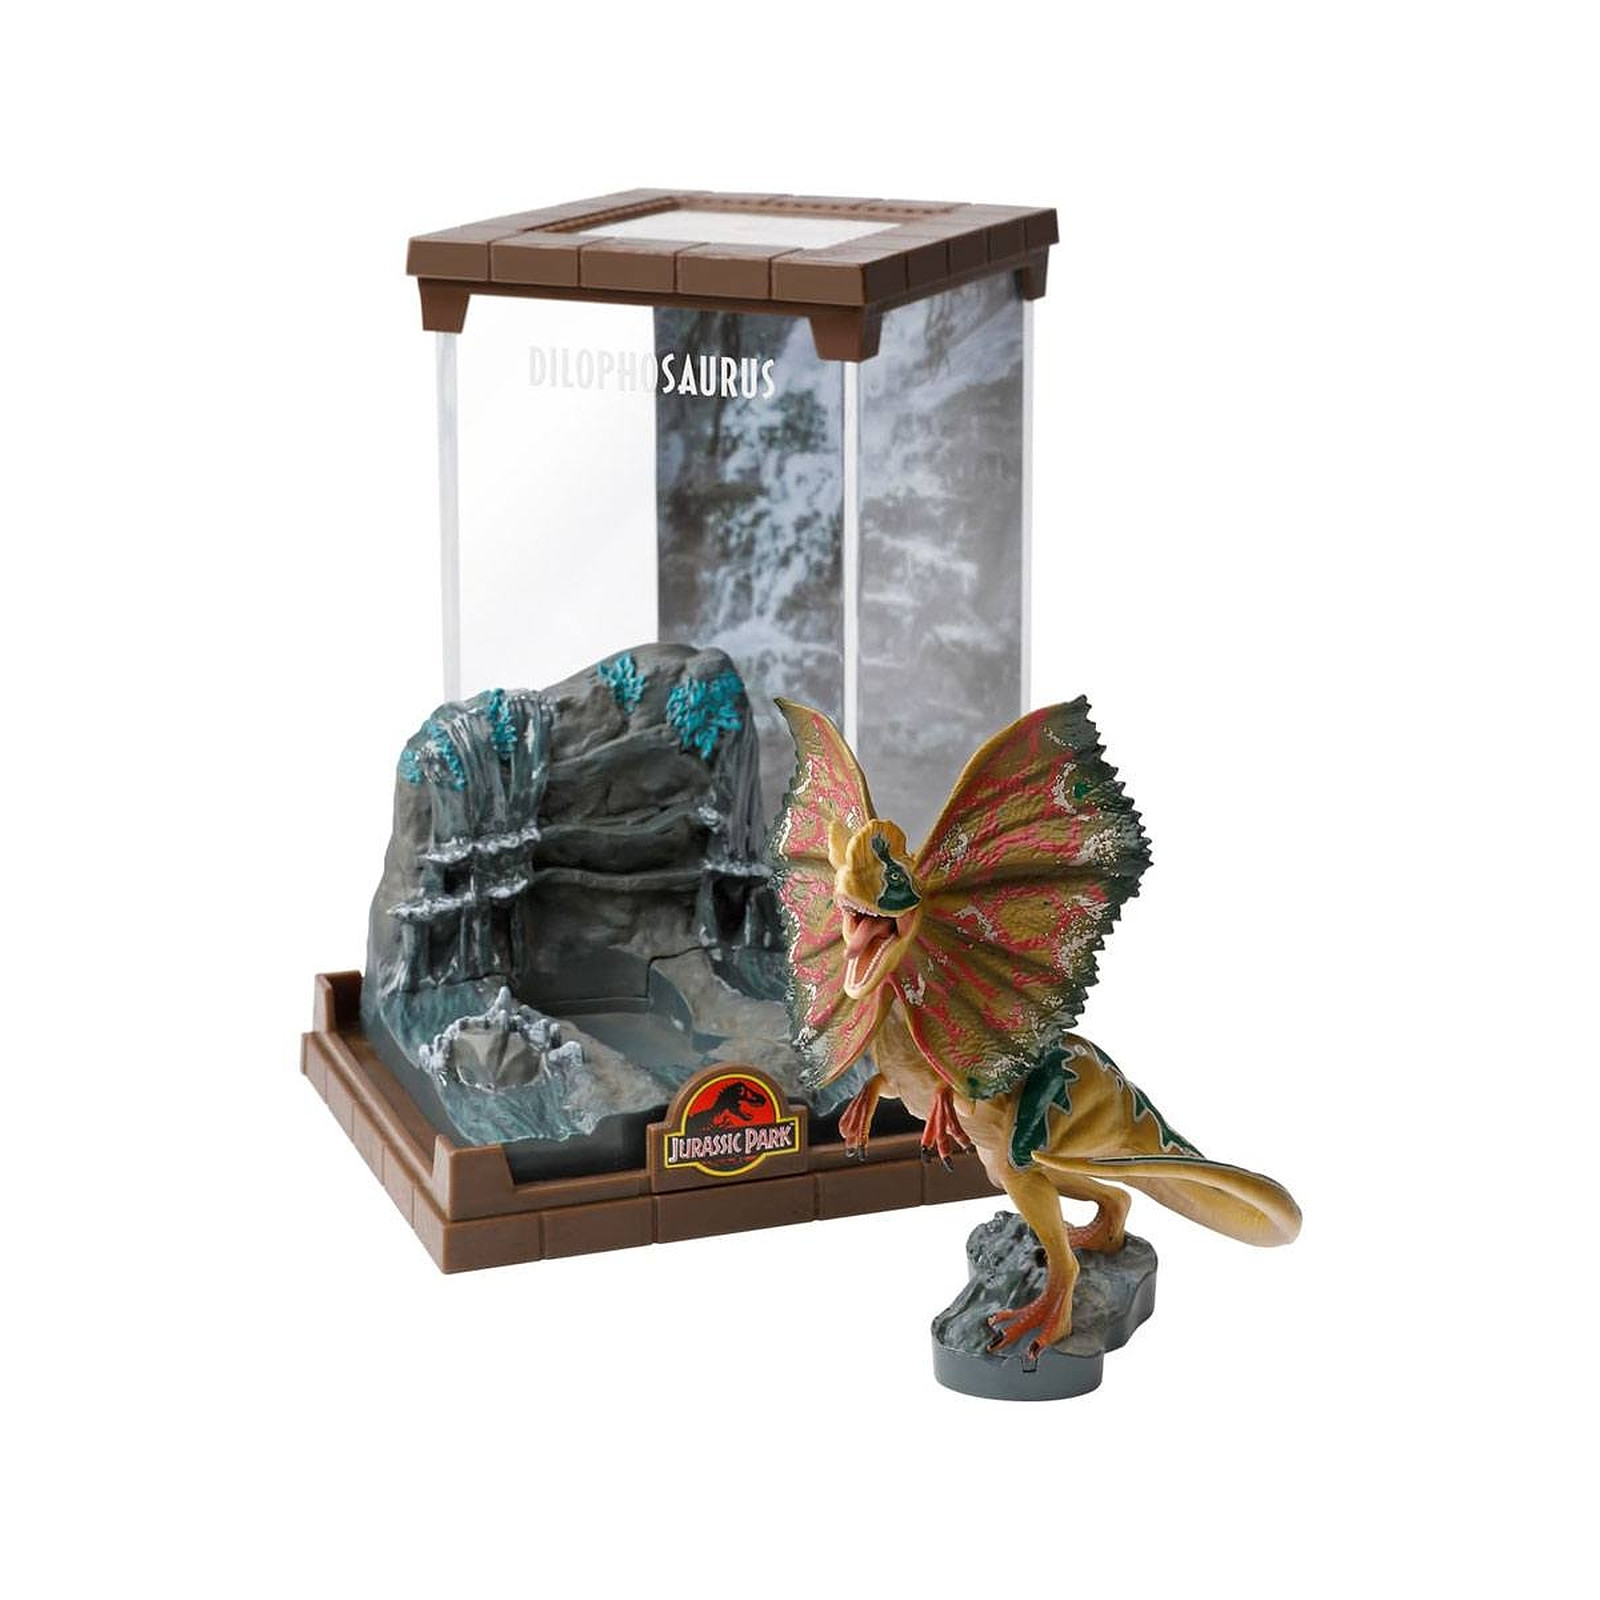 Jurassic Park Creature - Diorama Dilophosaurus 18 cm - Figurines Noble Collection